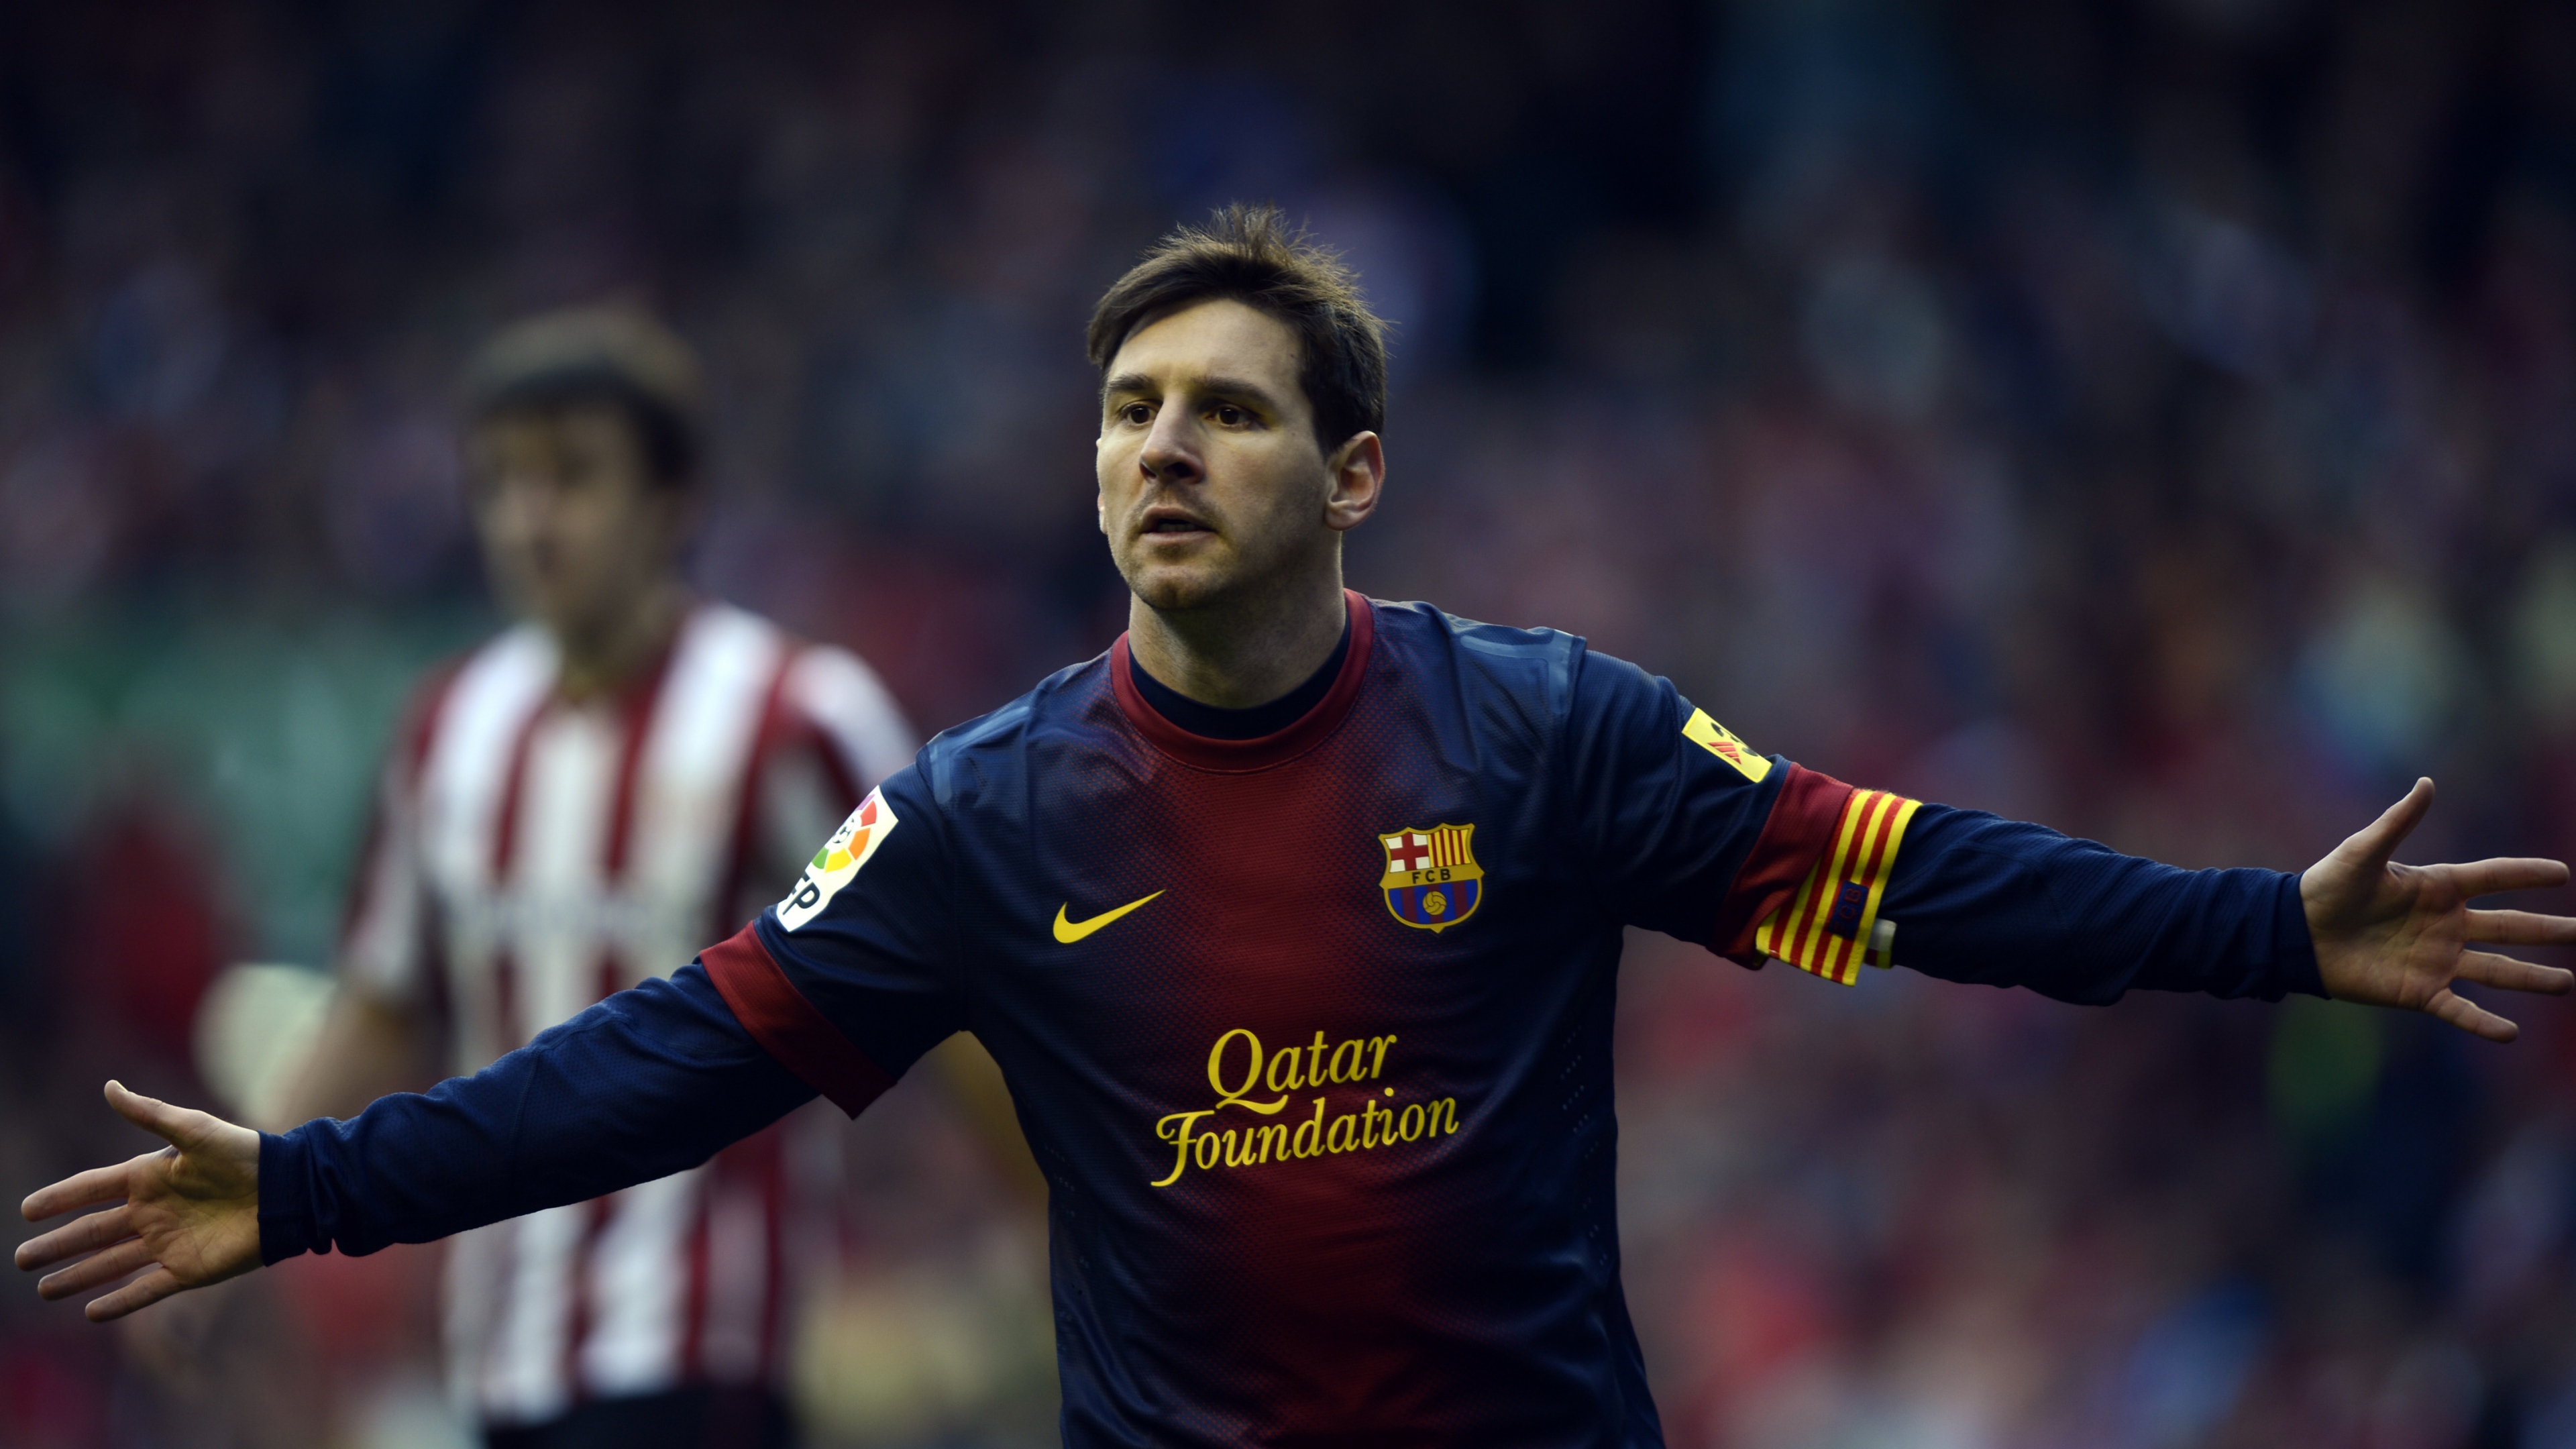 4k Lionel Messi Wallpaper Background Image